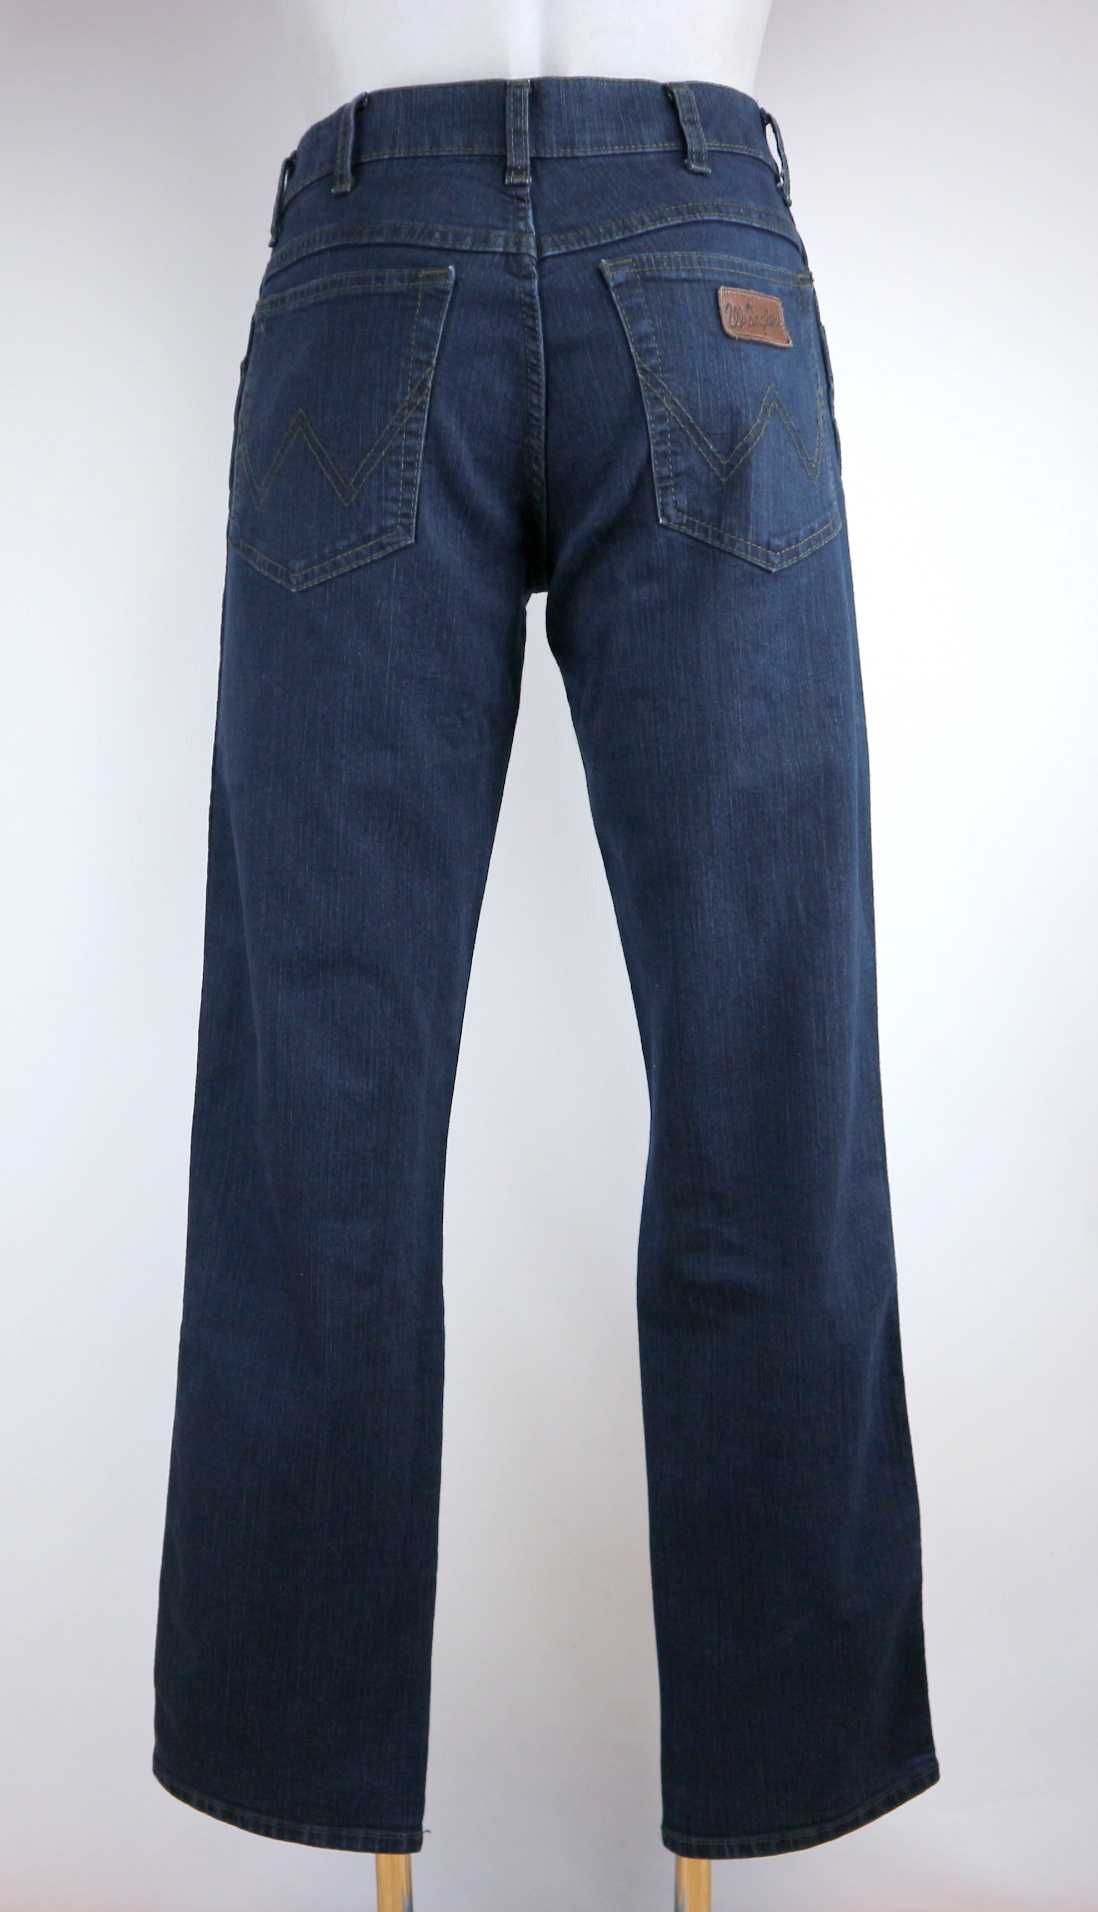 Wrangler Texas Stretch spodnie jeansy W32 L34 pas 2 x 41 cm